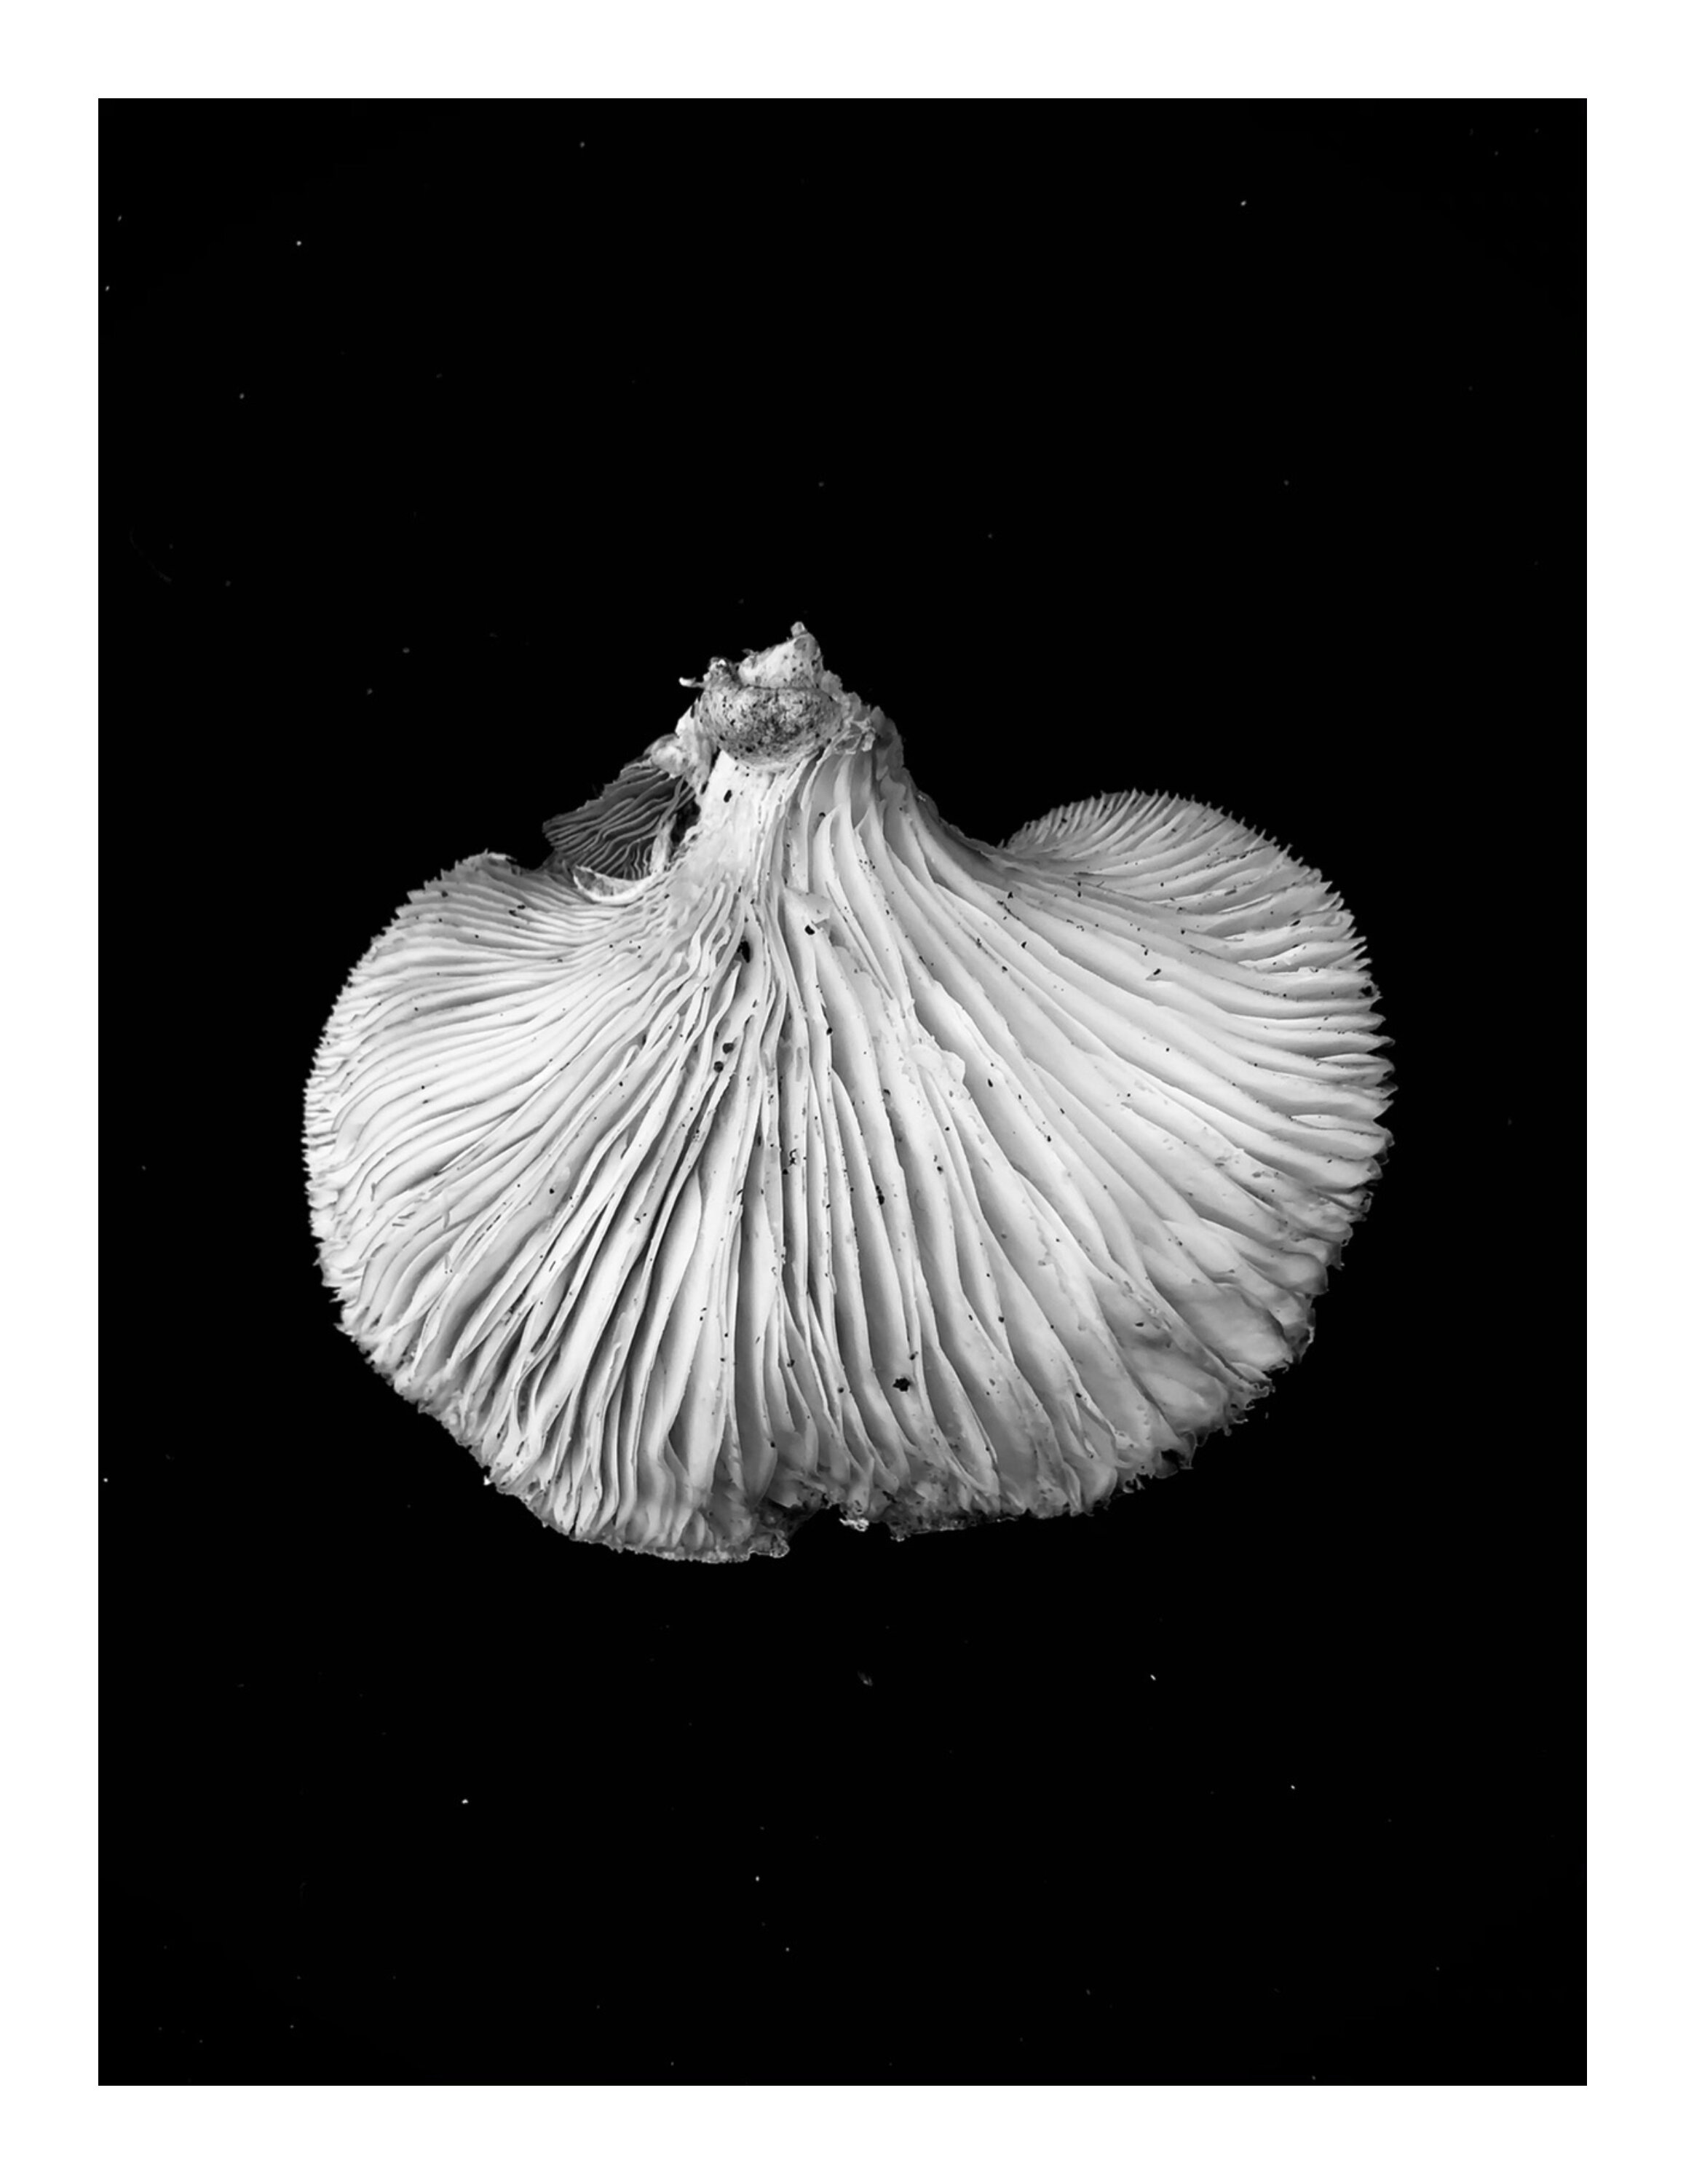 Tree oyster mushroom £95 @12x8"